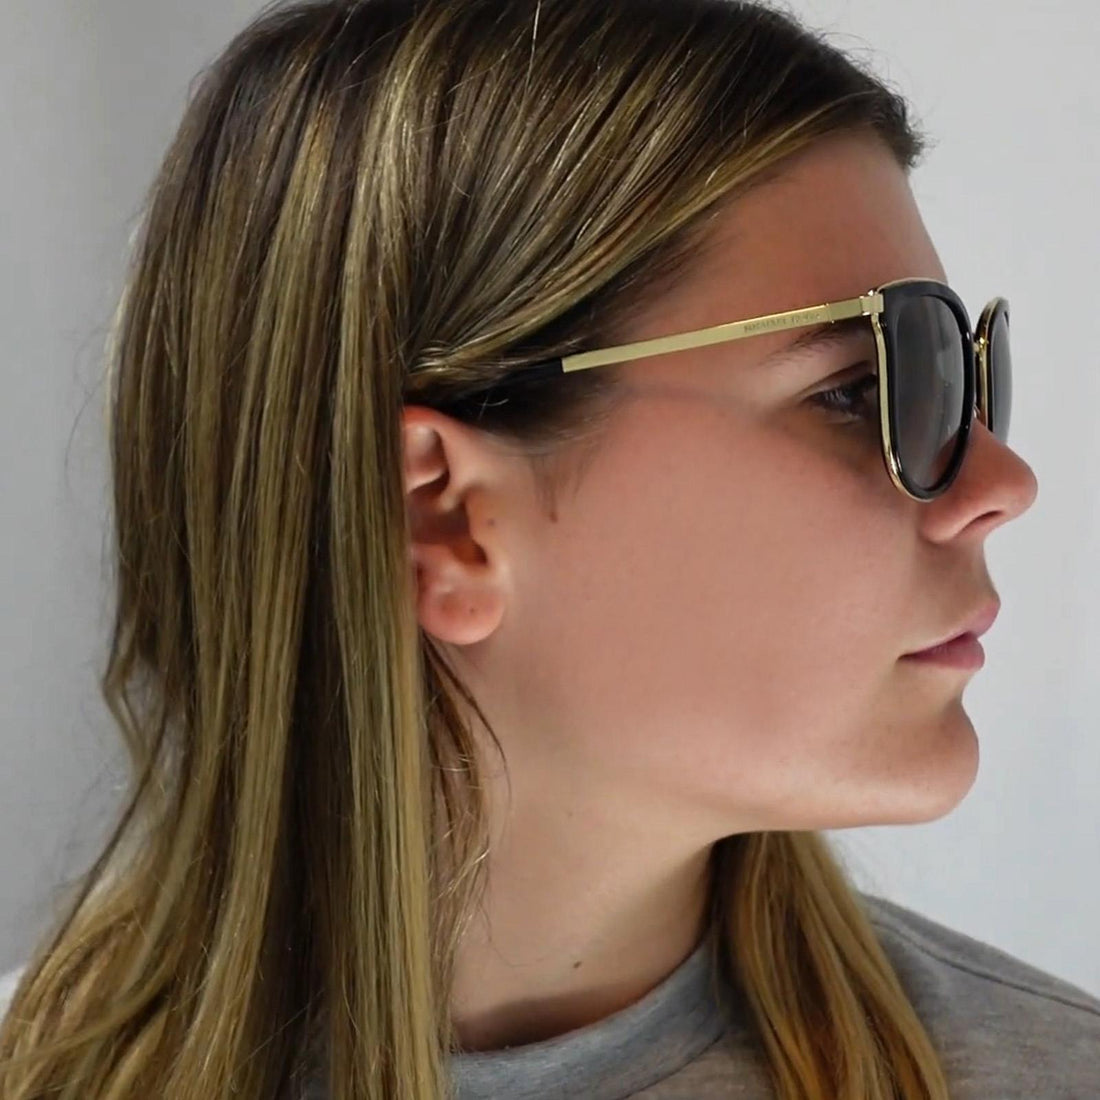 Michael Kors Sunglasses Adrianna 1 1010 1100T3 Black Gold Grey Gradient Polarized